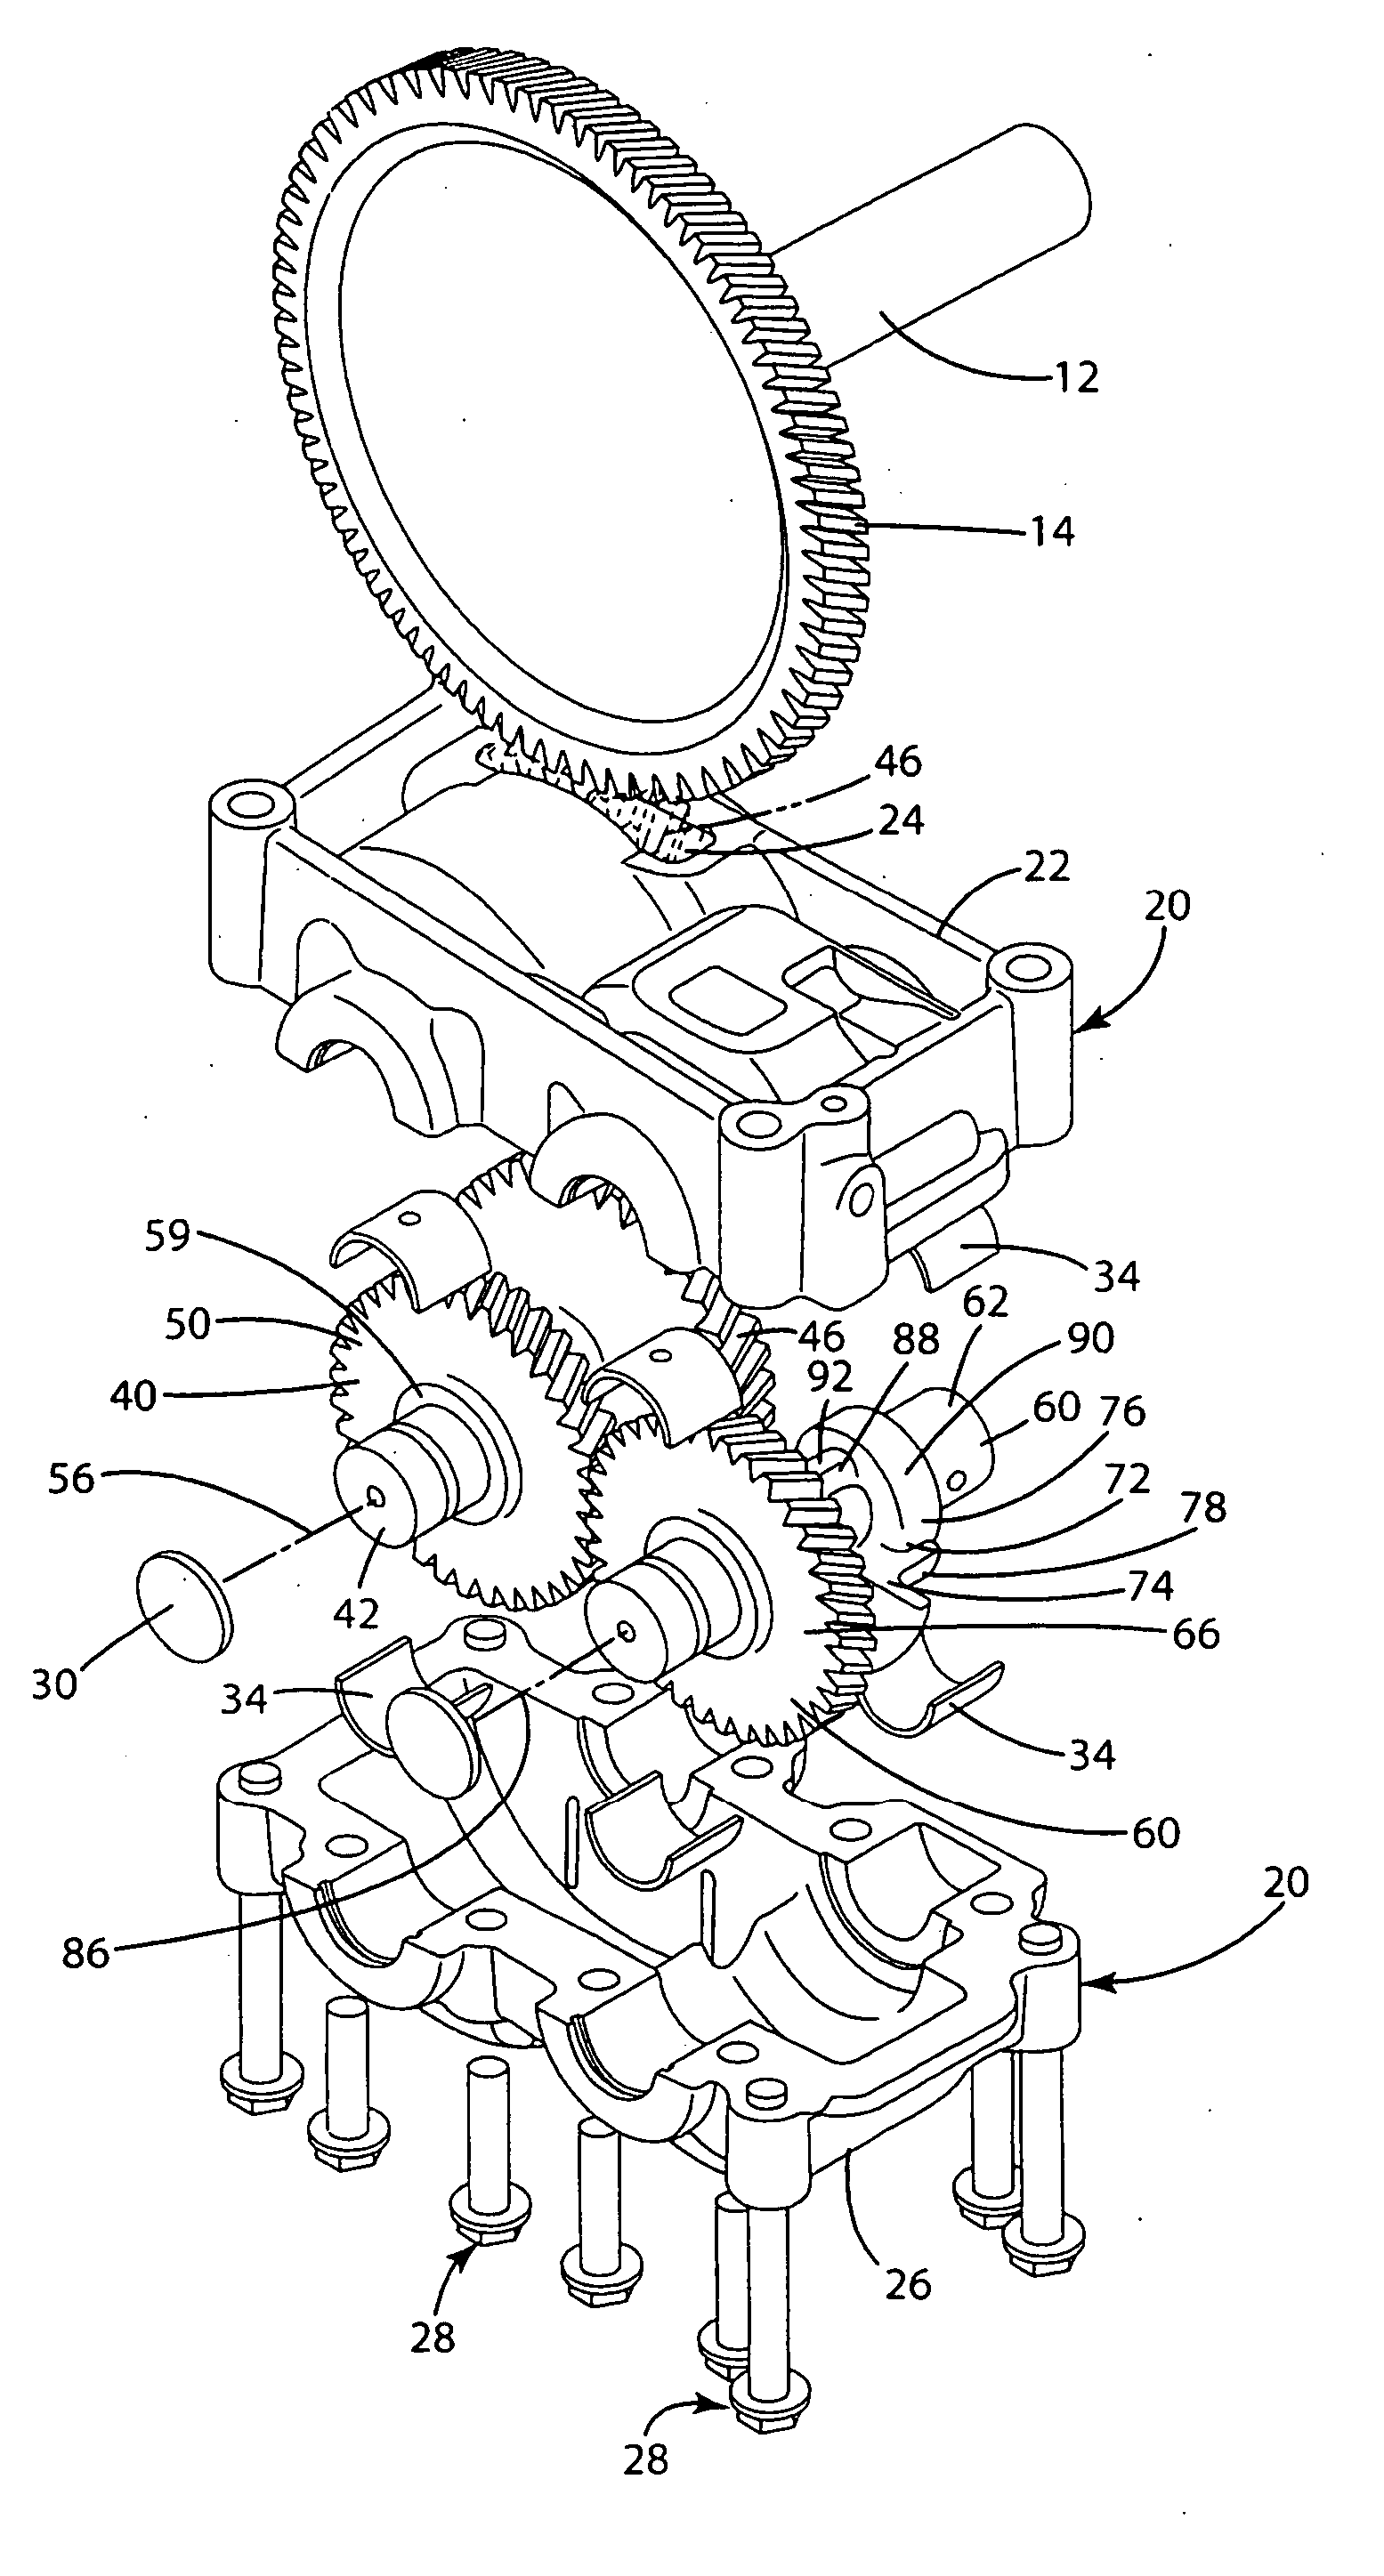 Engine balancer apparatus